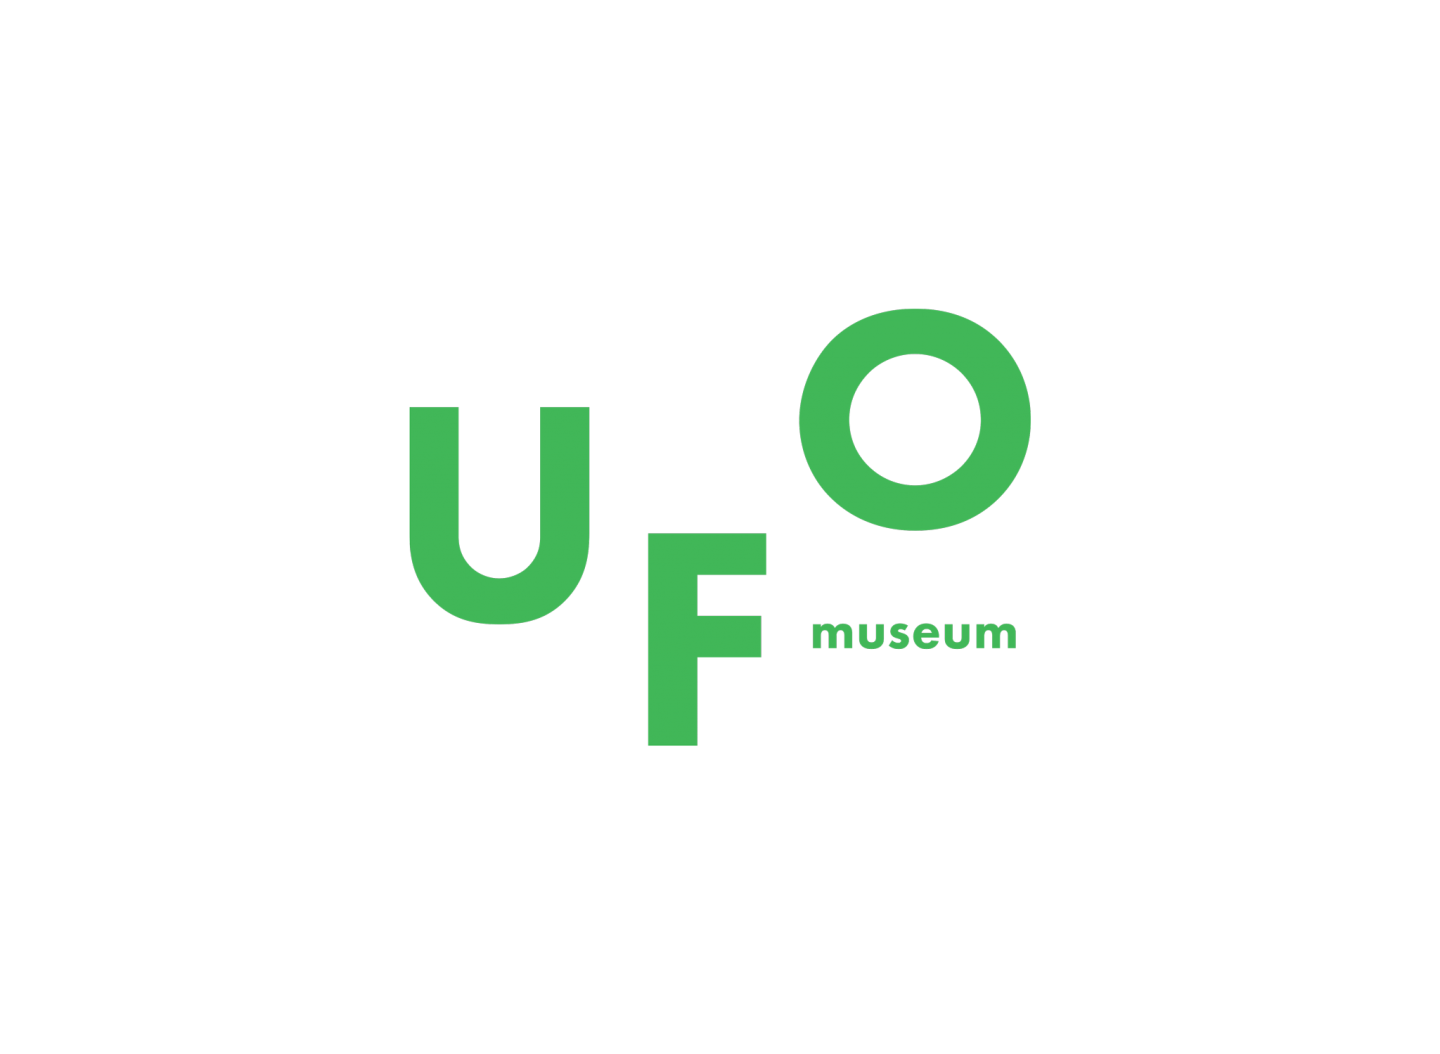 UFO Museum Identity